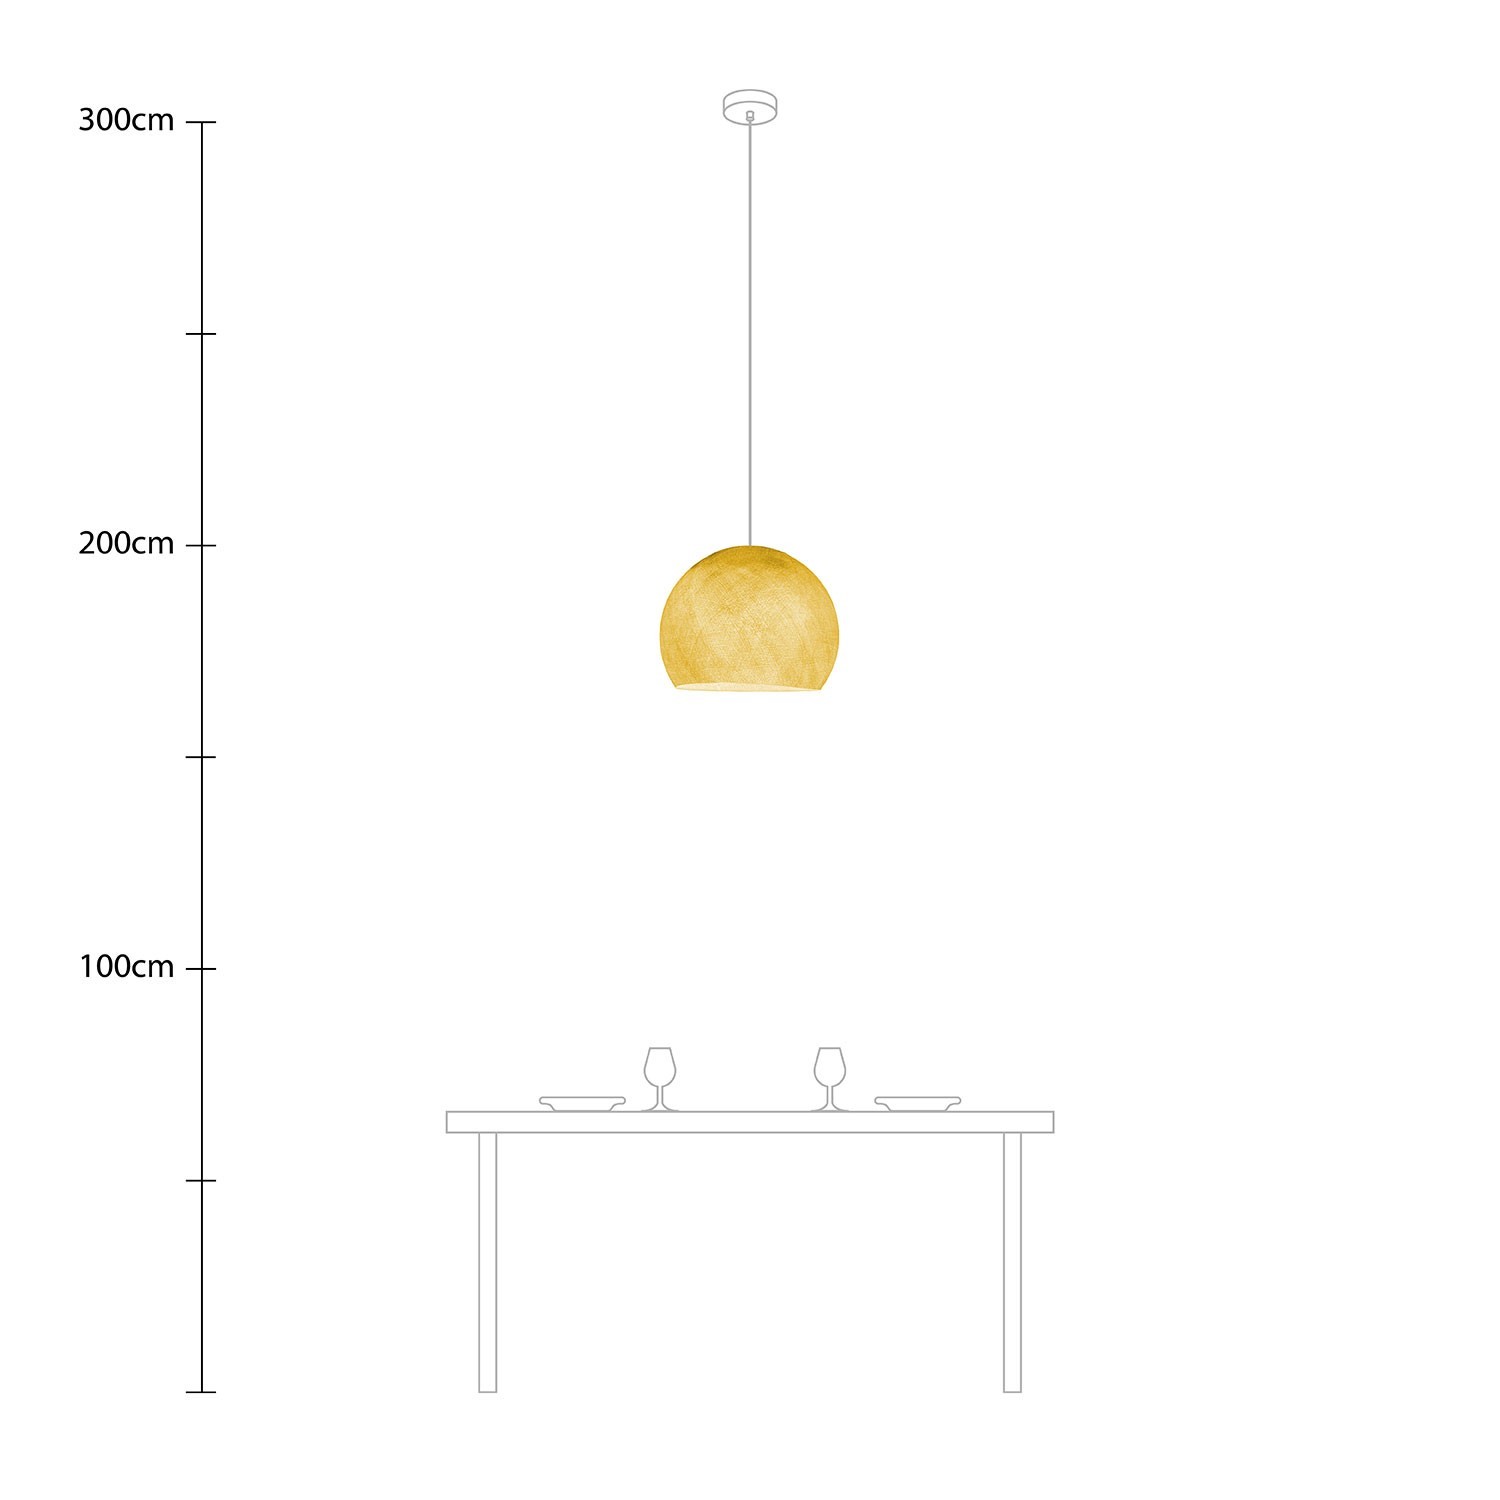 Dome Lampeskærm i fiber - 100% håndlavet